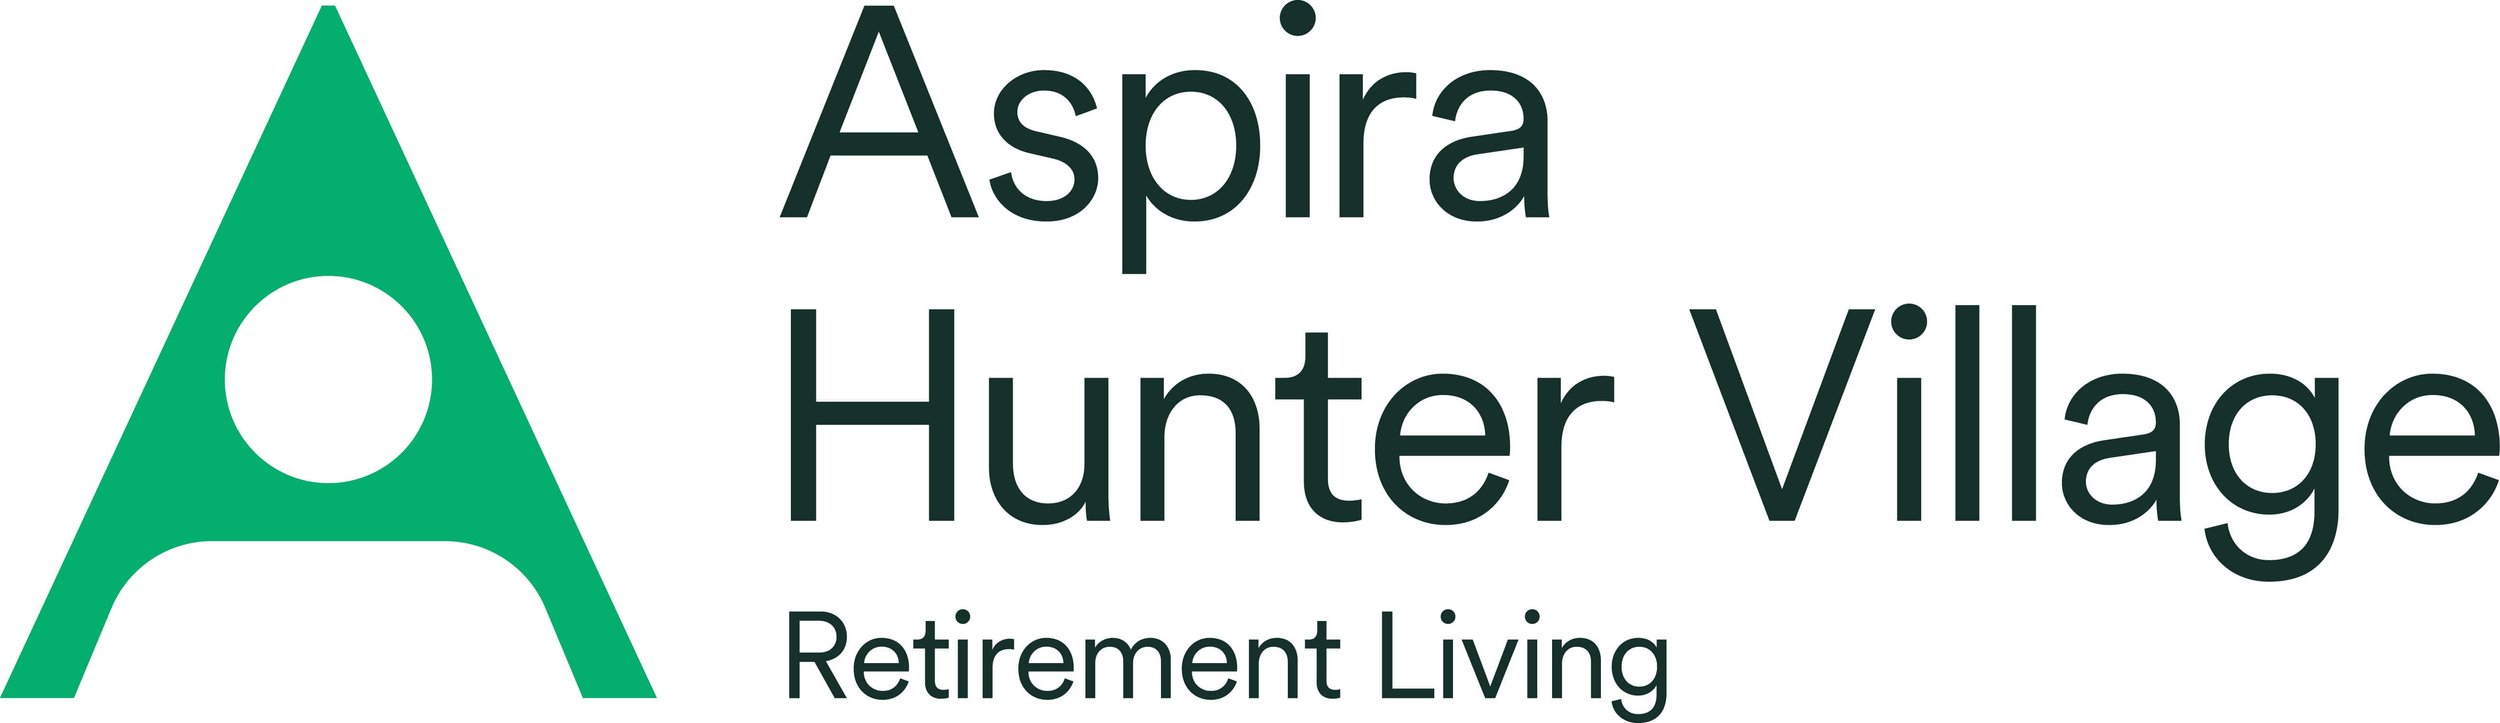 Aspira-logo-Hunter_Village_Hub Club.jpg